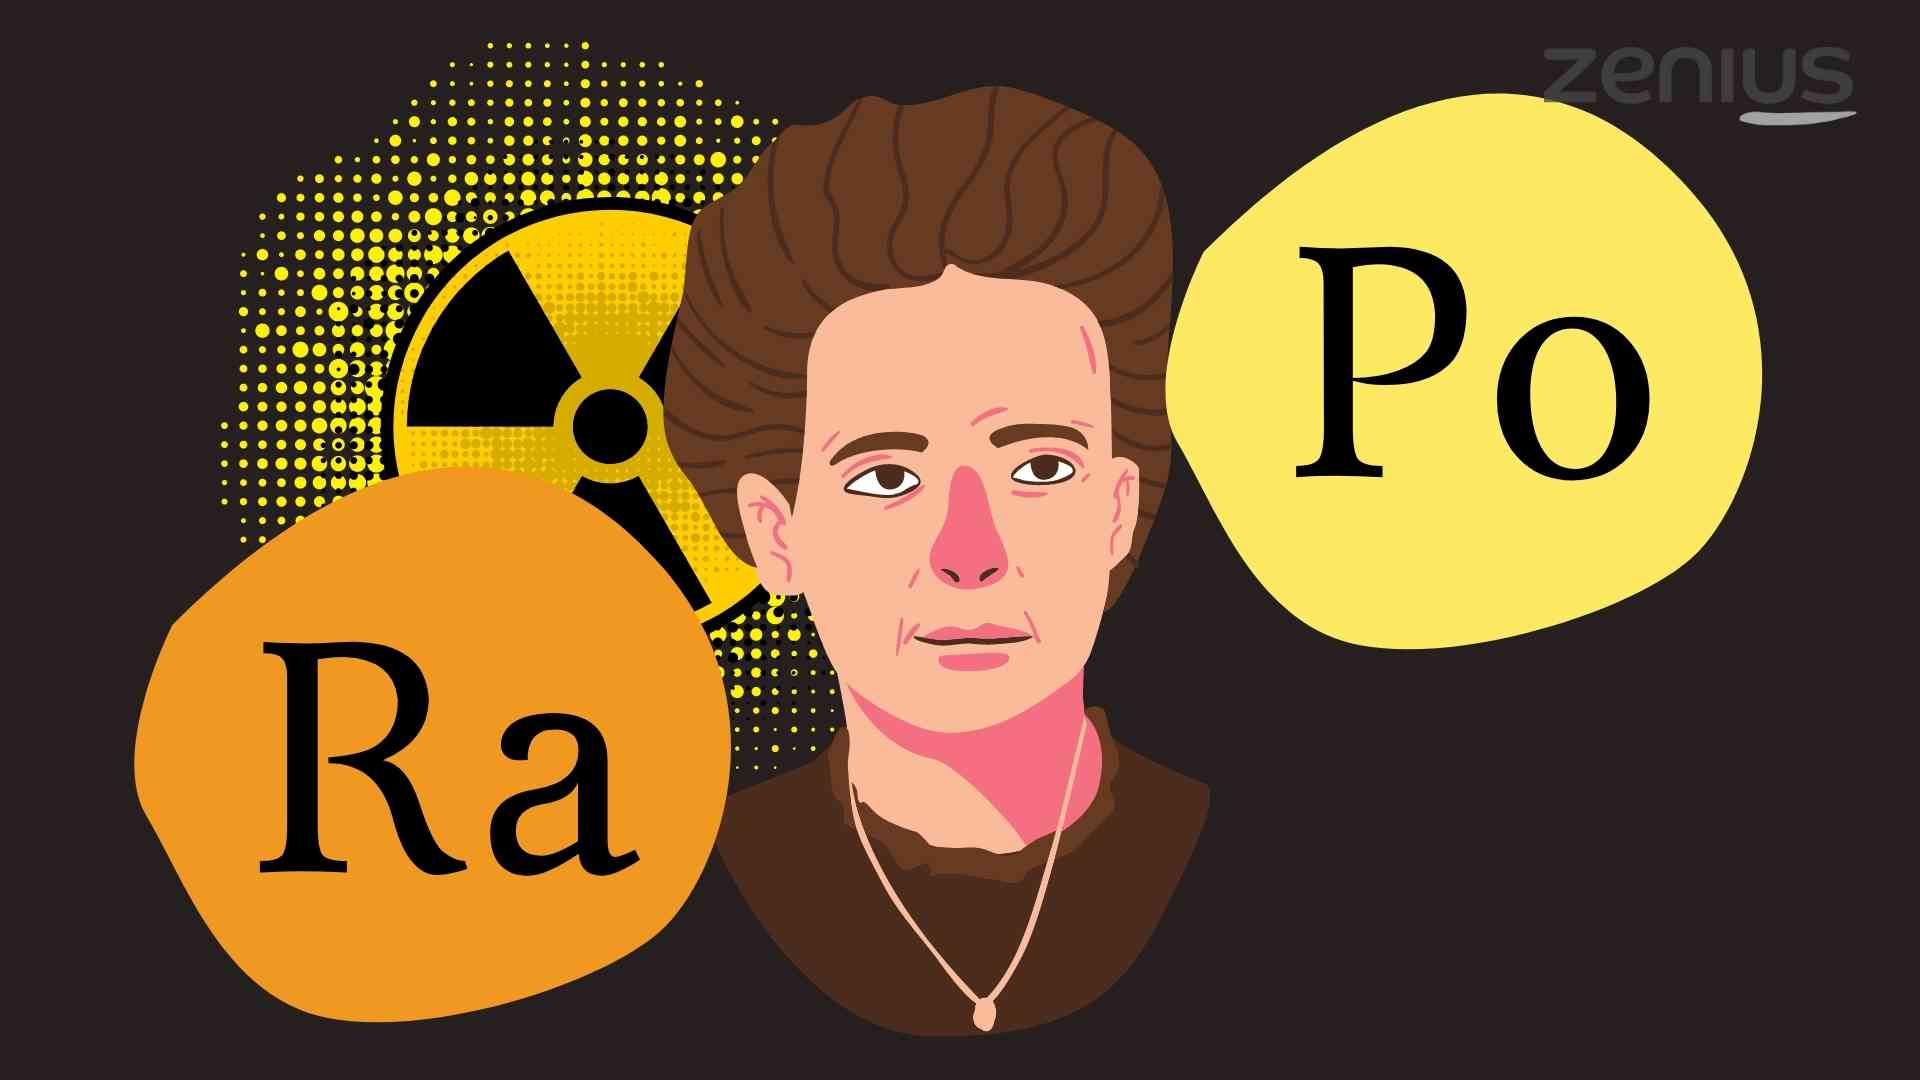 Marie Curie menemukan radium dan polonium